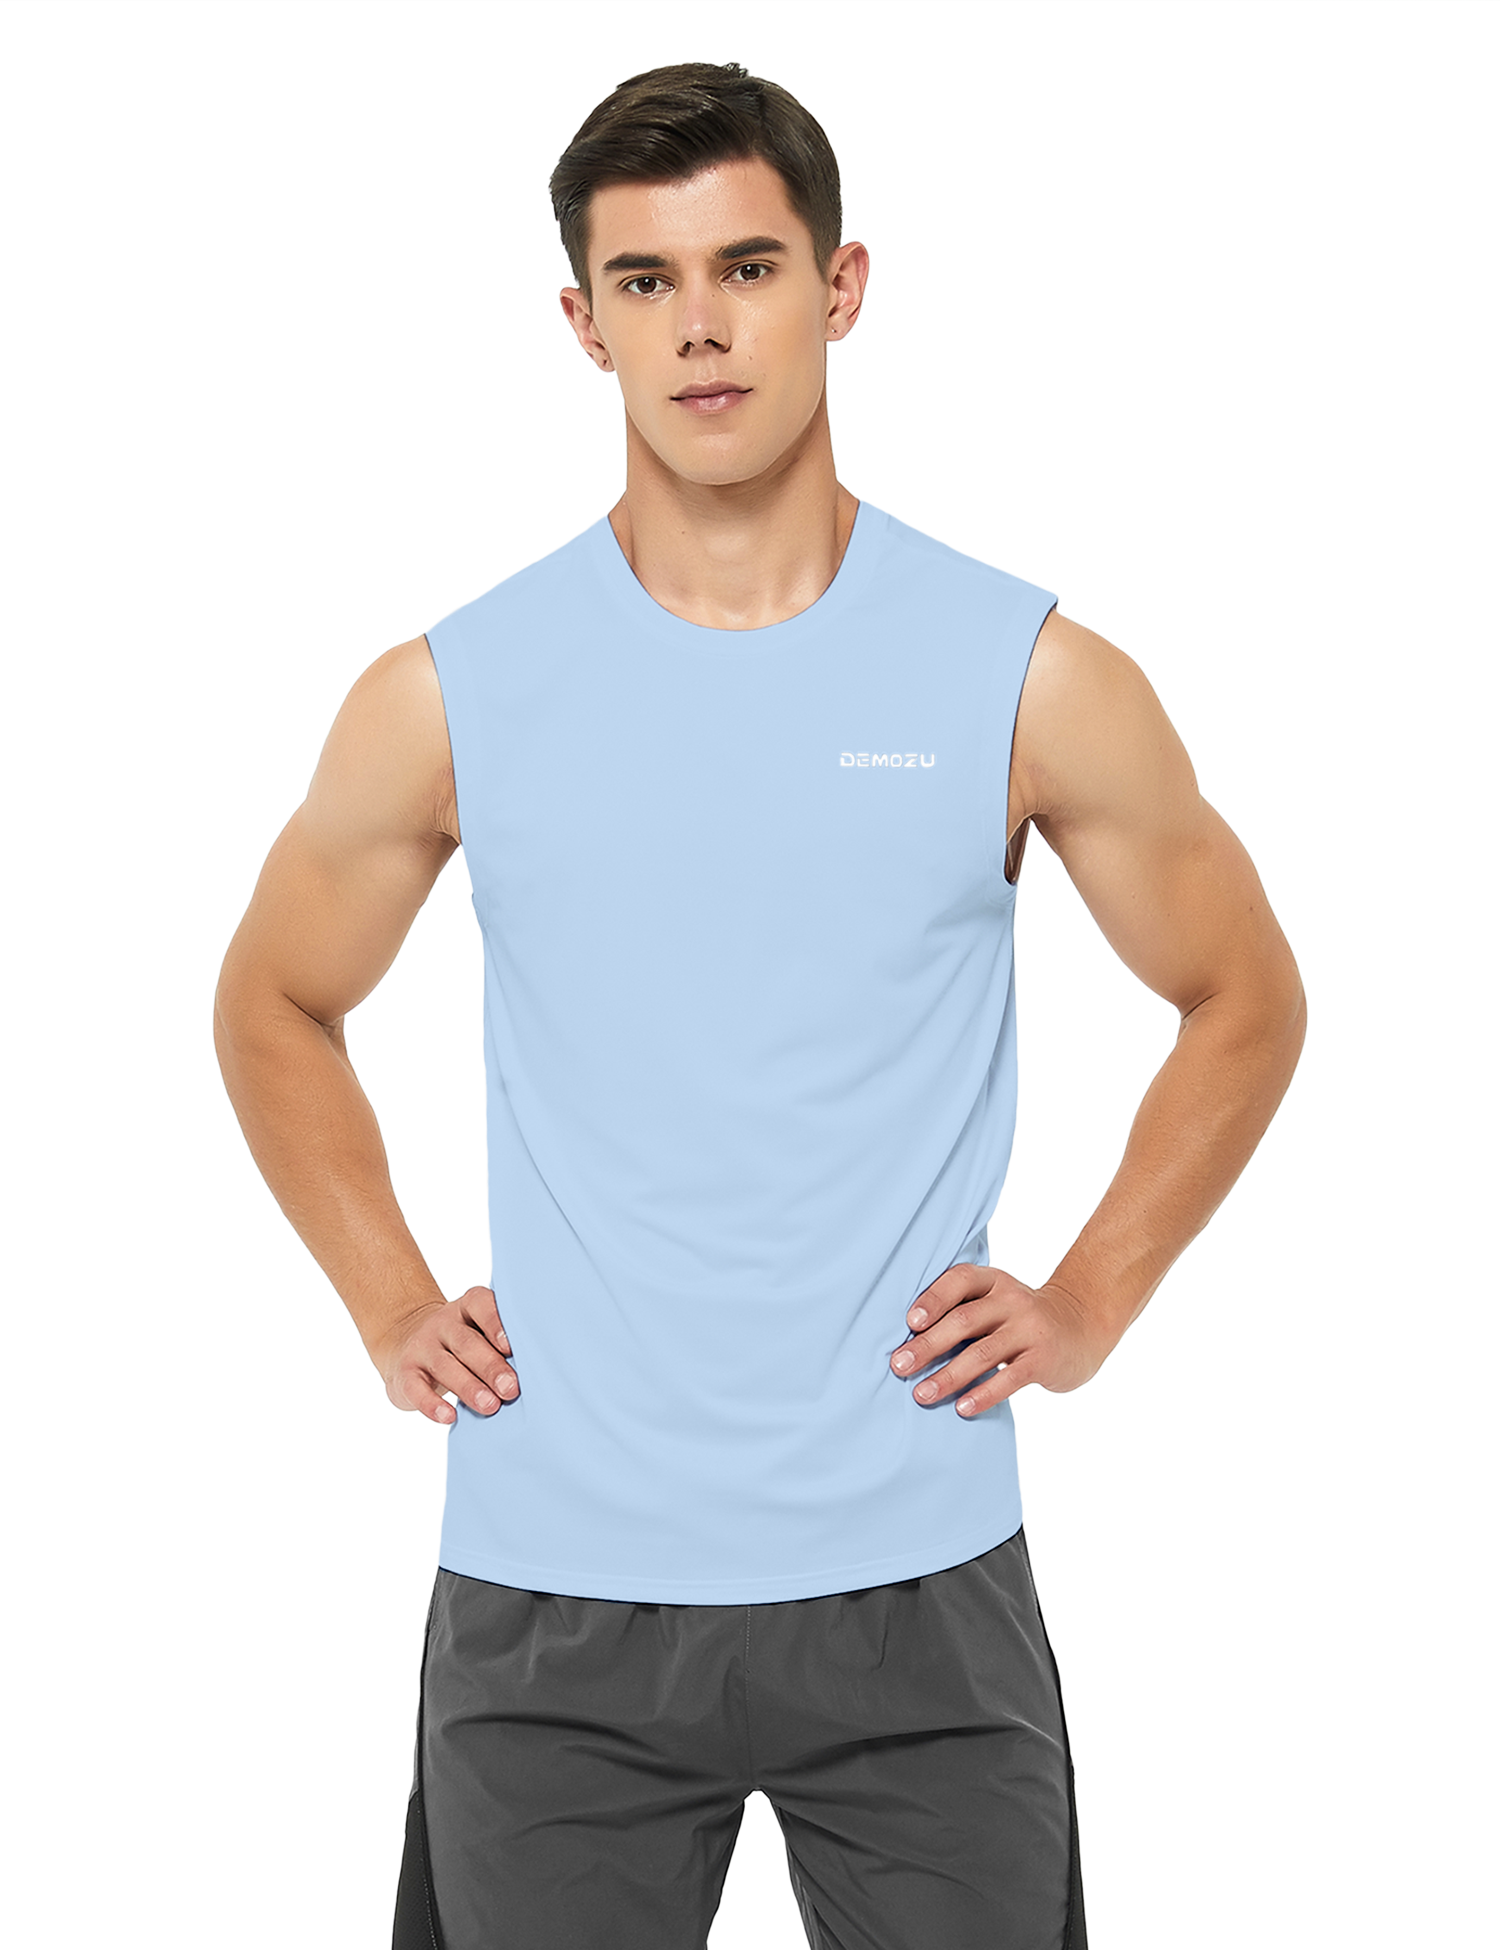 mens sleeveless workout swim shirts lavender blue